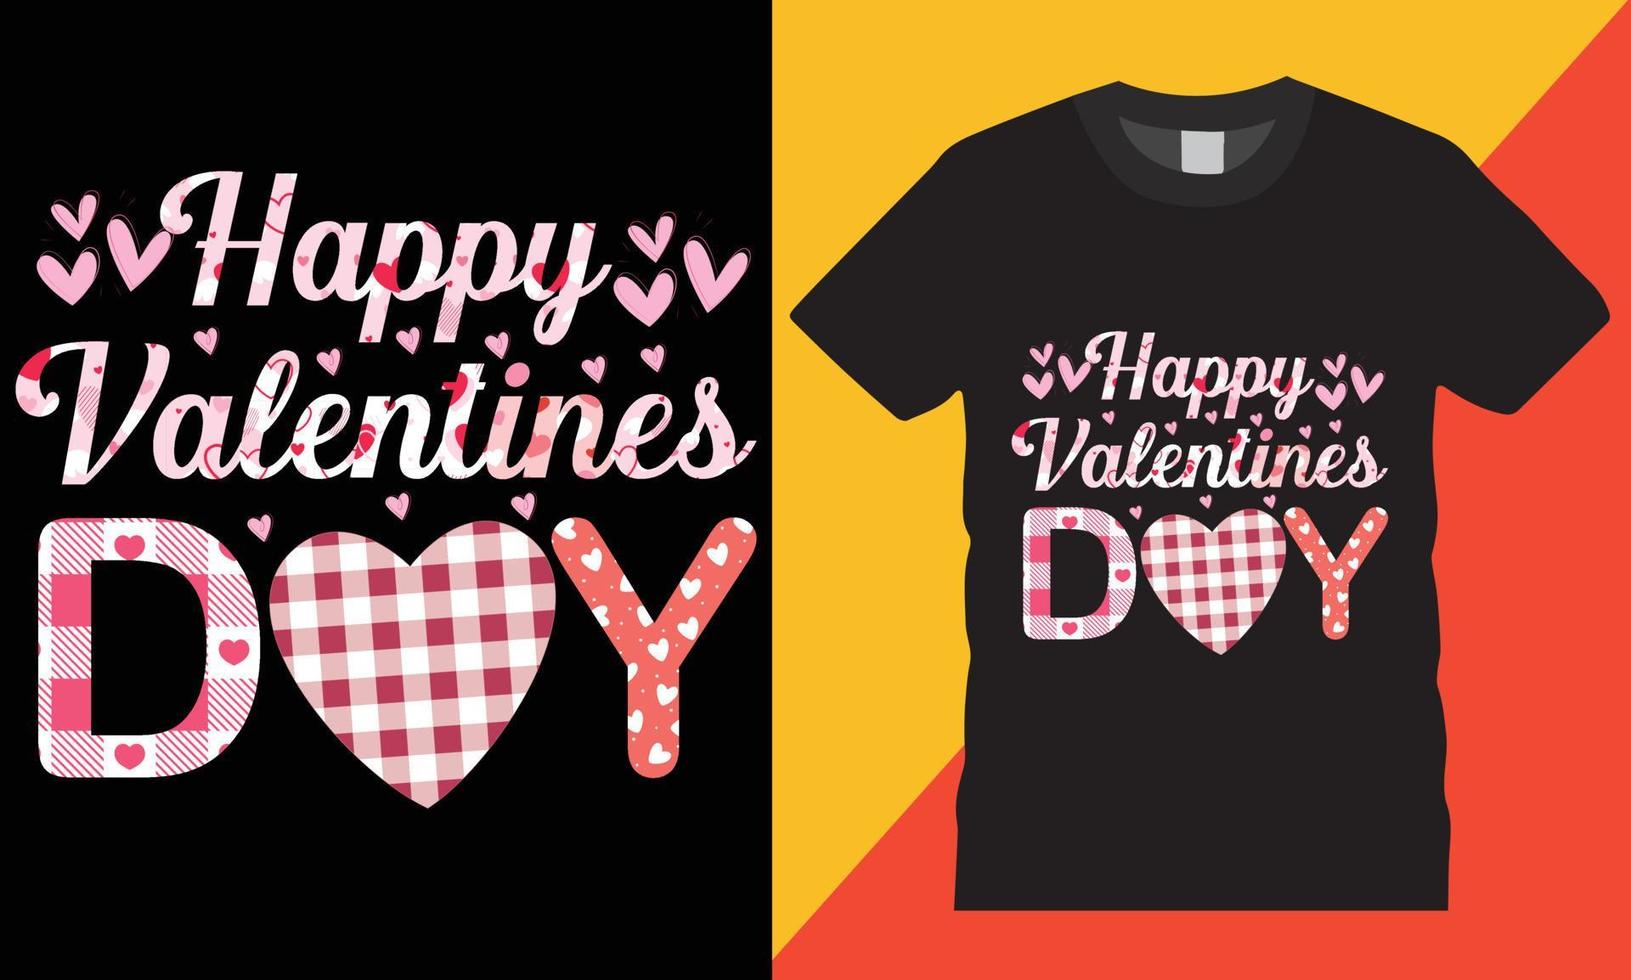 typografi valentines dag kreativ t-shirt design vektor